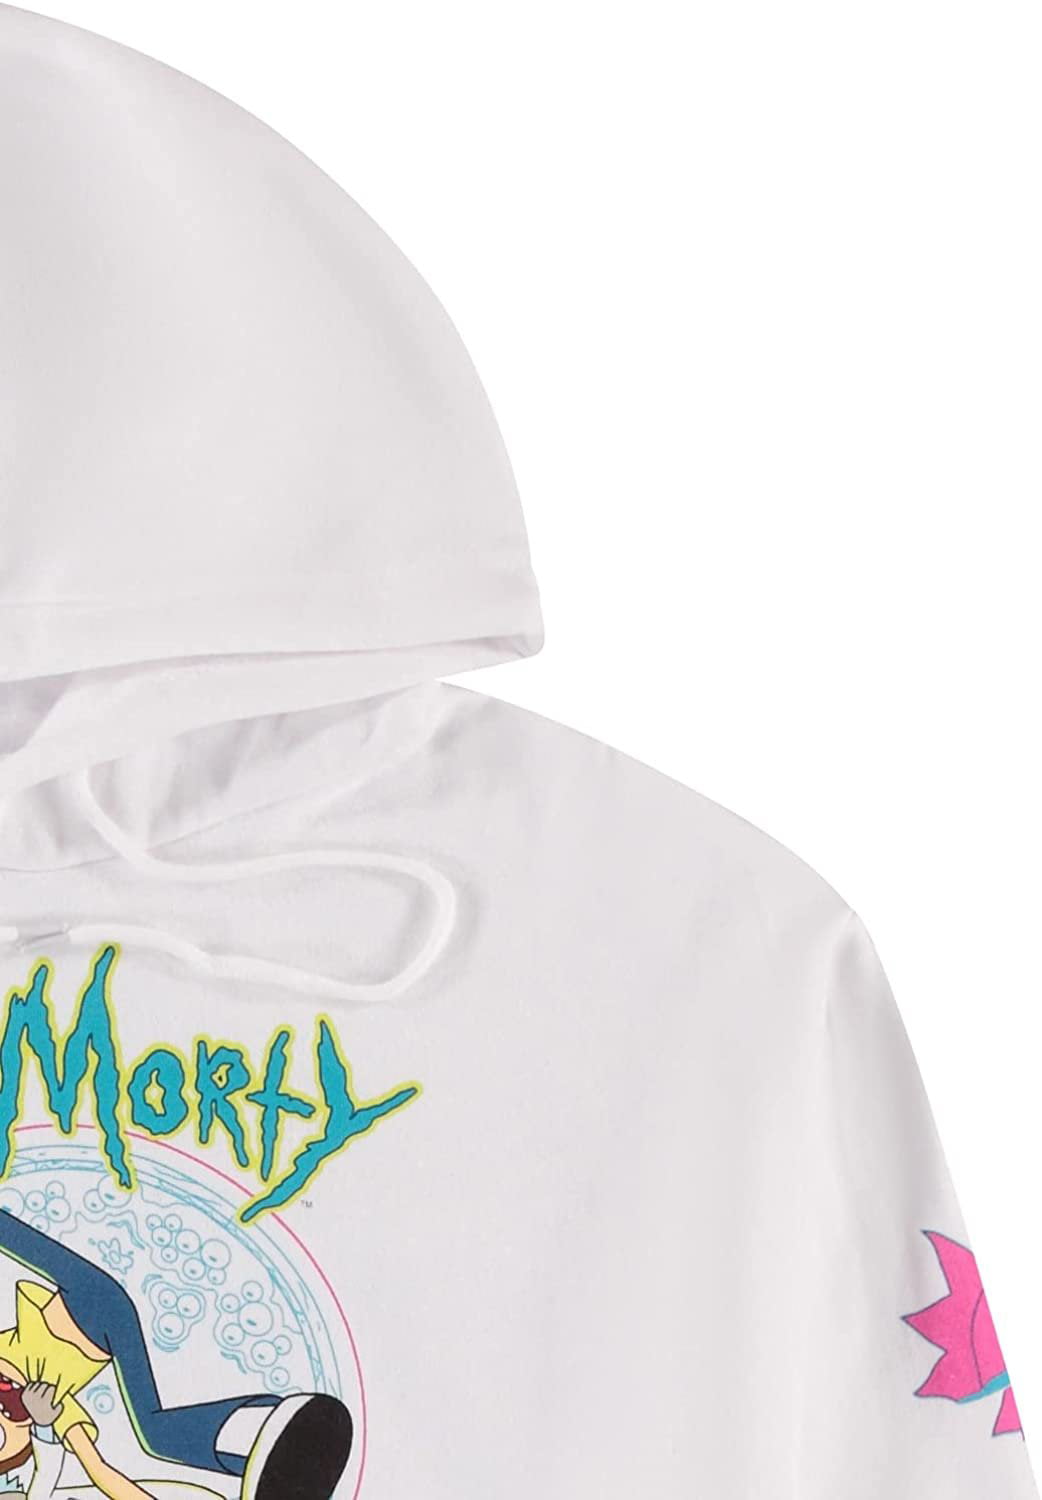 AND MORTY Mens Hoodie Mens Multi Print Sweatshirt - Rick & Morty, Summer, Squanchy Classic Hoodie White, Large - Walmart.com